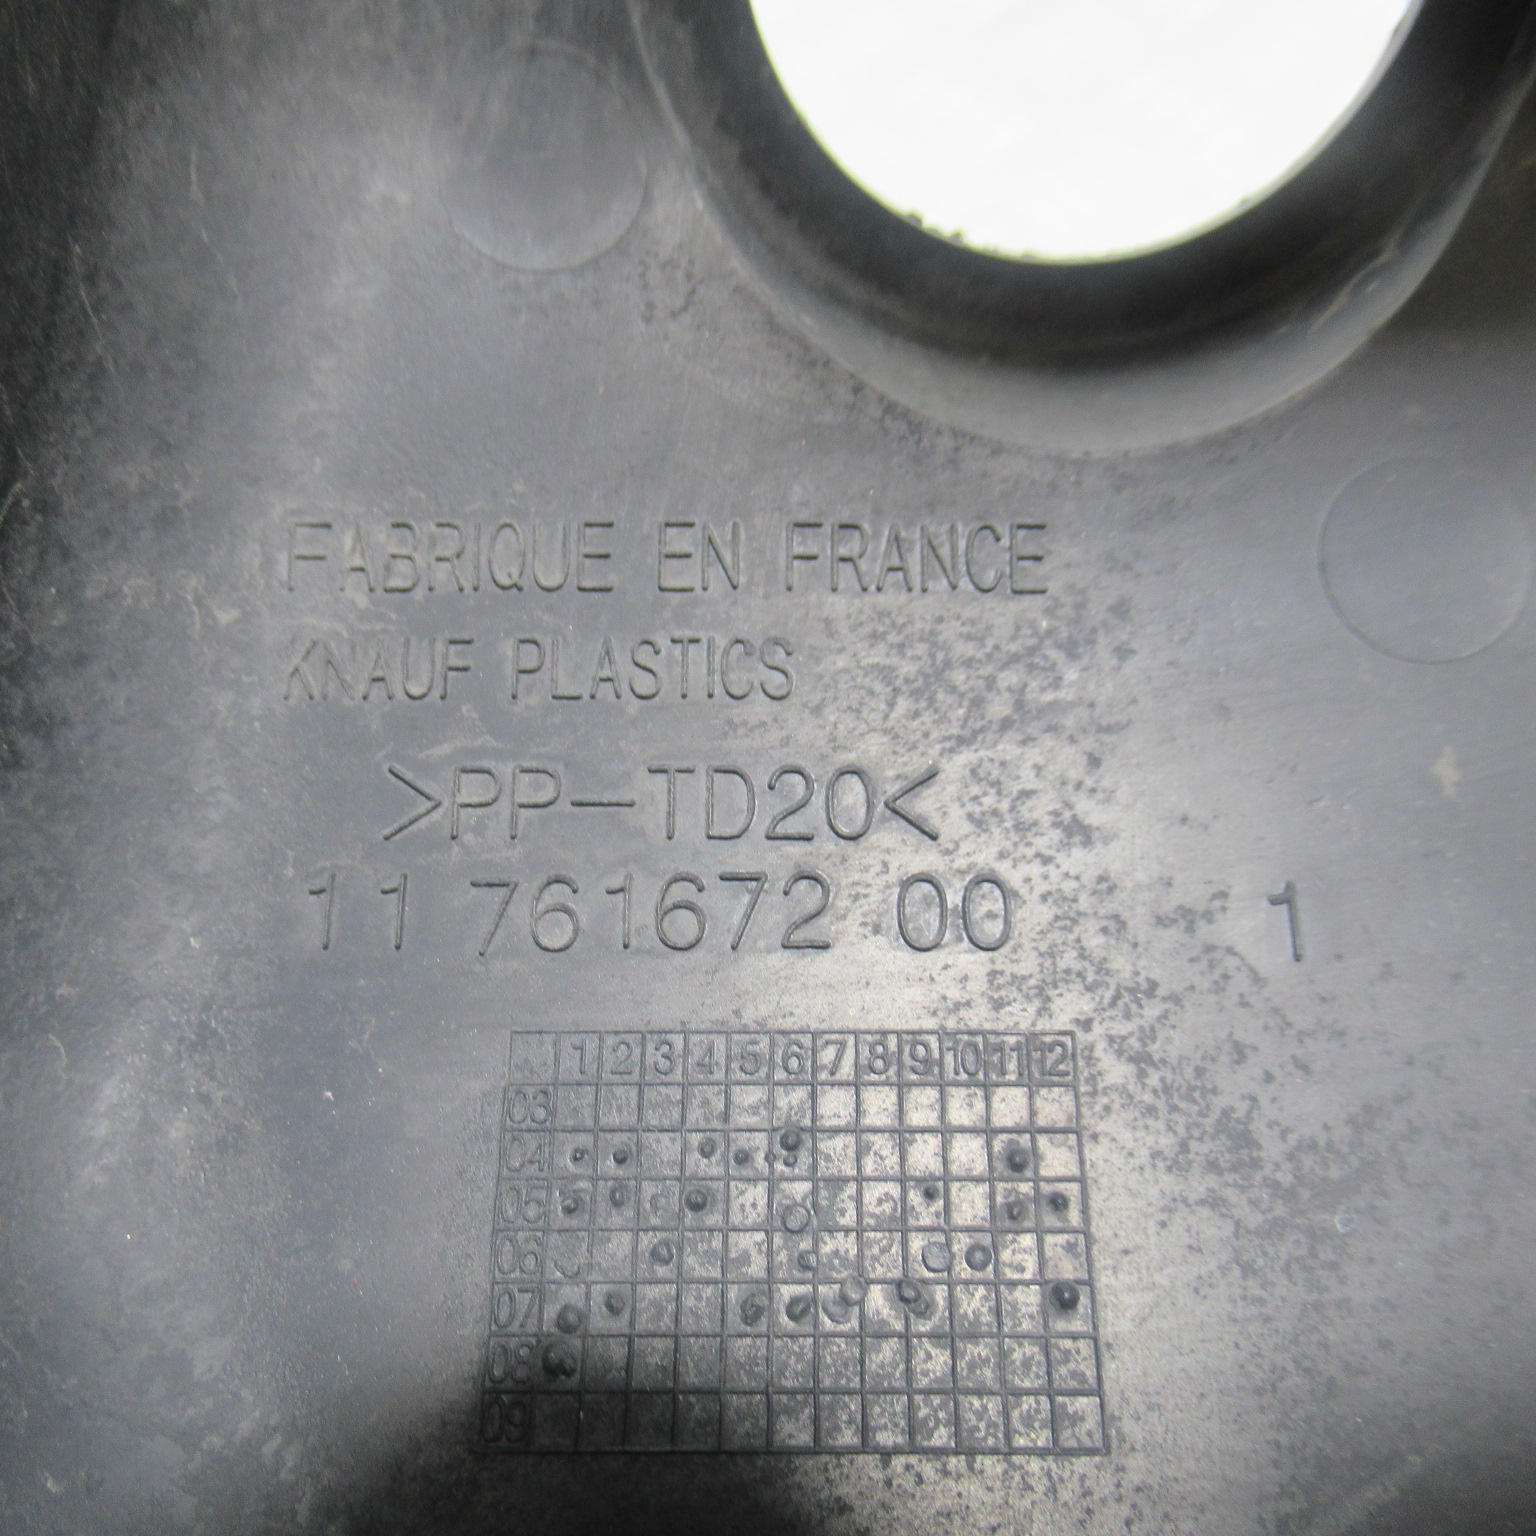 Cache cylindre piston Peugeot Ludix 50 2t (1176167200)